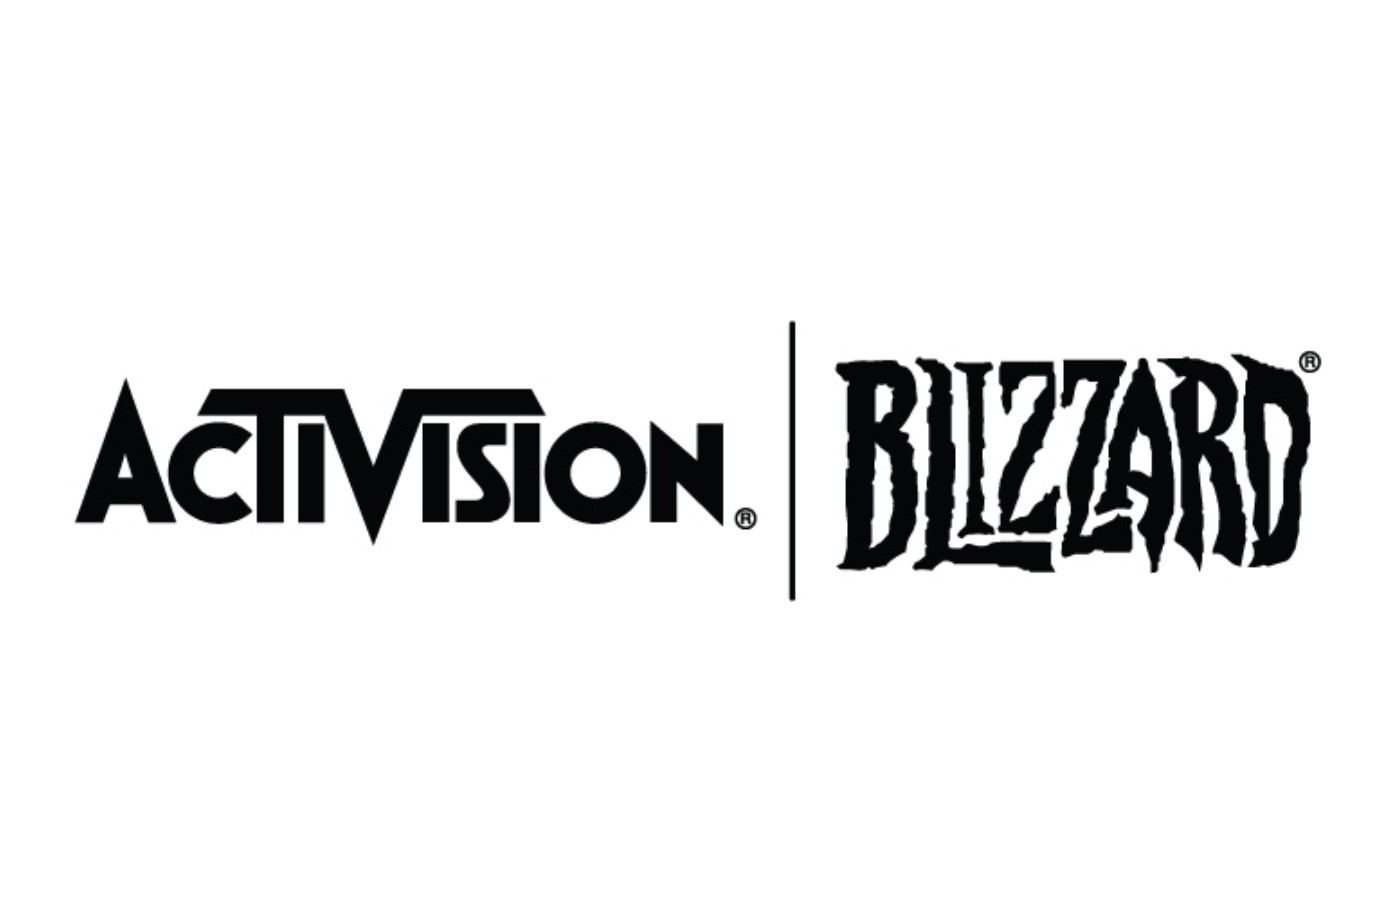 Activision-Blizzard allegations